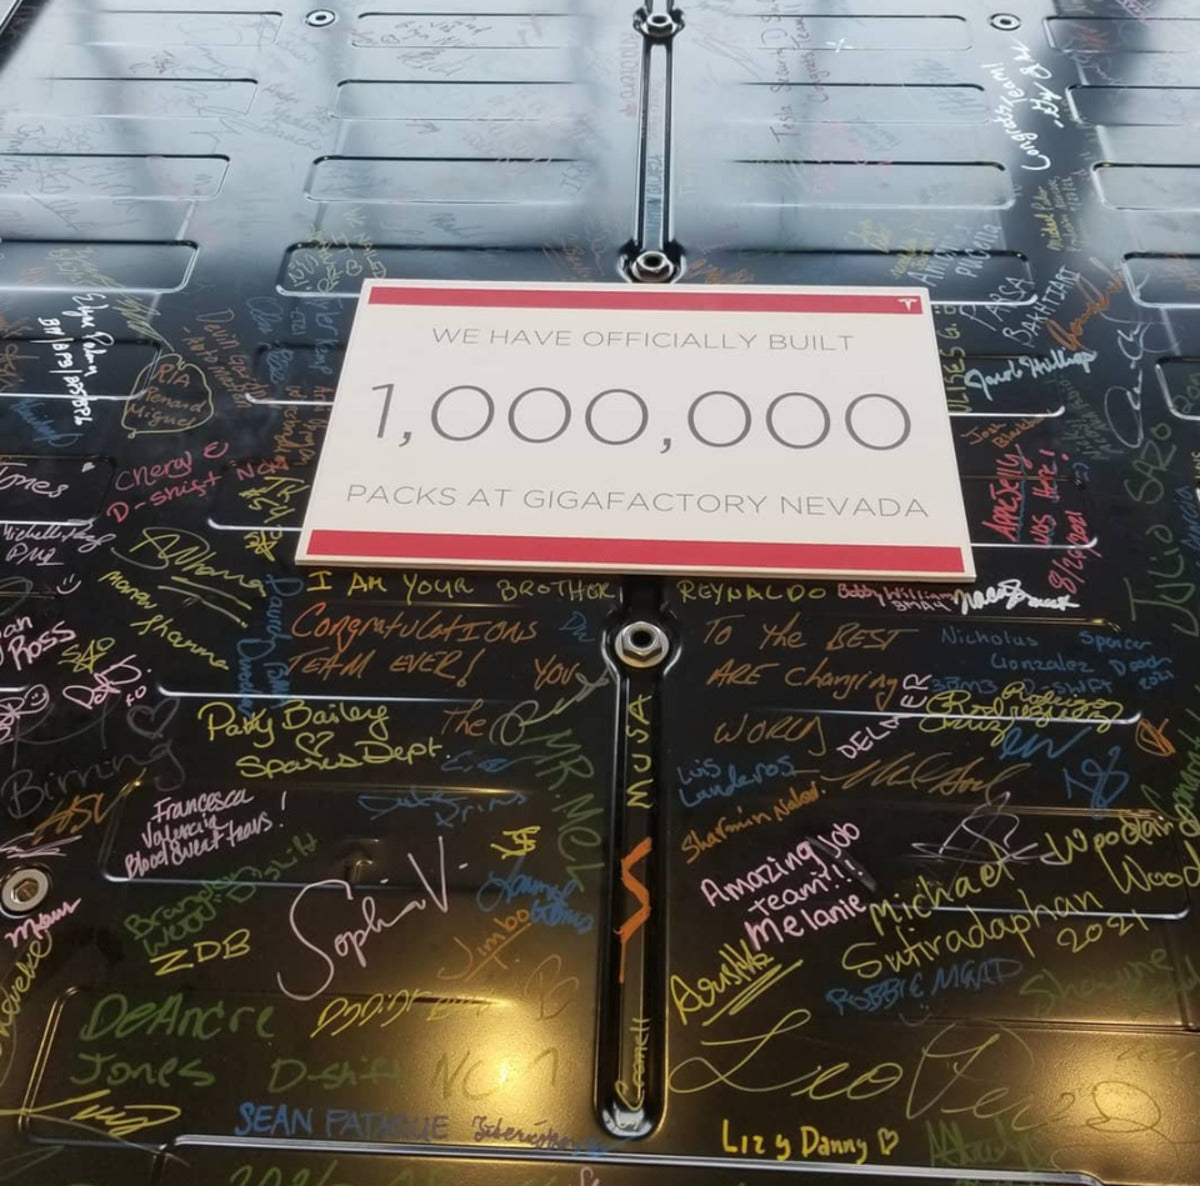 Tesla Giga Nevada Reaches Notable Milestone: 1,000,000 Battery Packs Produced